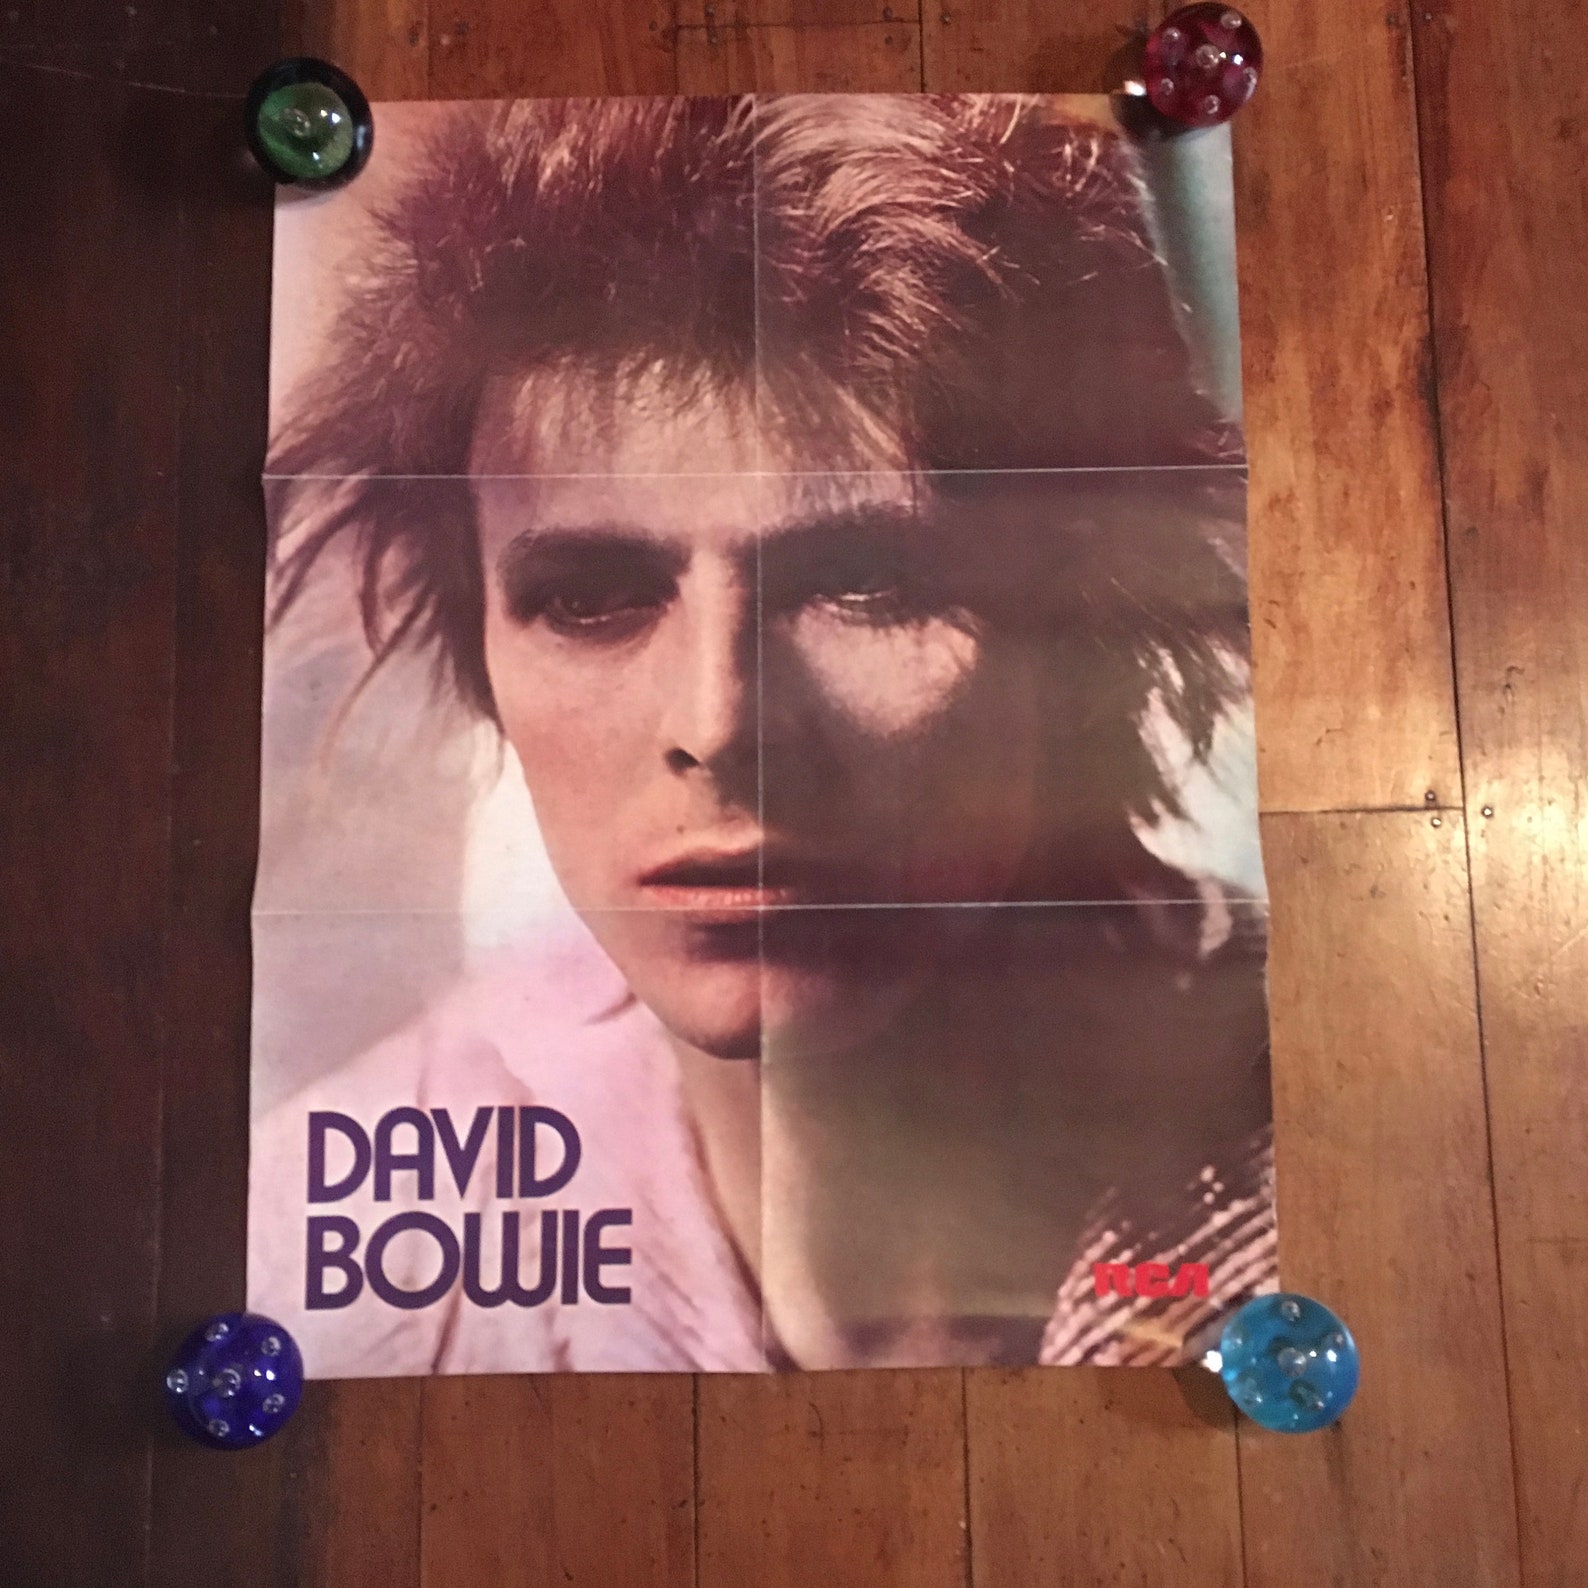 David bowie's space oddity. David Bowie Space Oddity 1969. Боуи Space Oddity. Bowie David "Space Oddity". Дэвида Боуи Space Oddity альбом.